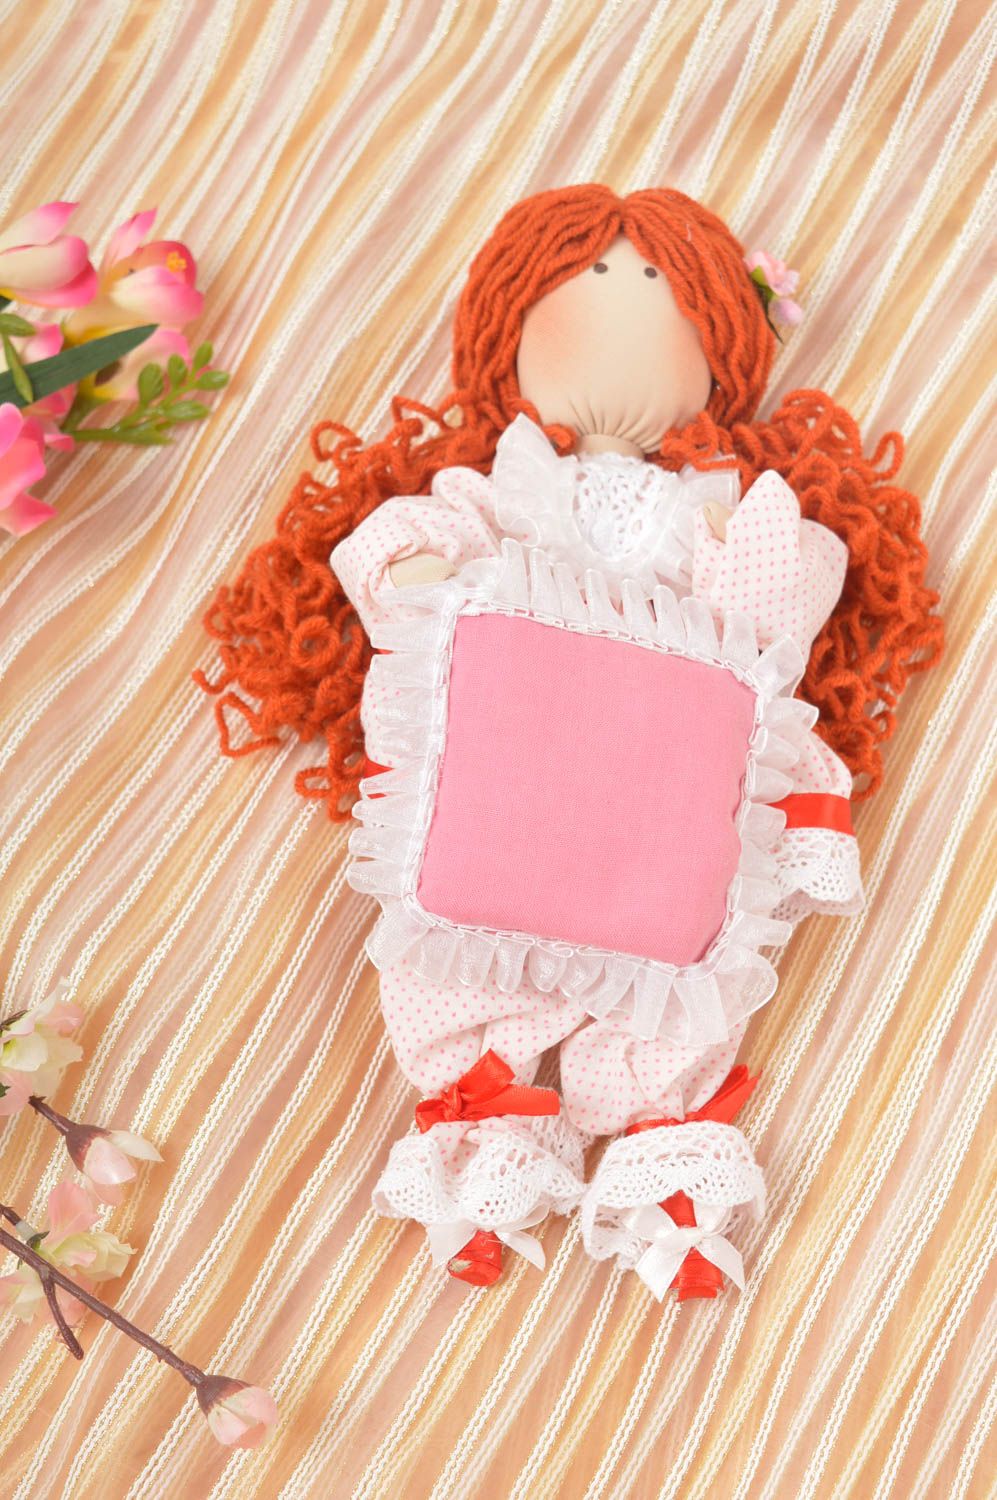 Handmade doll ginger hair stuffed toy designer childrens toy decoration ideas photo 1